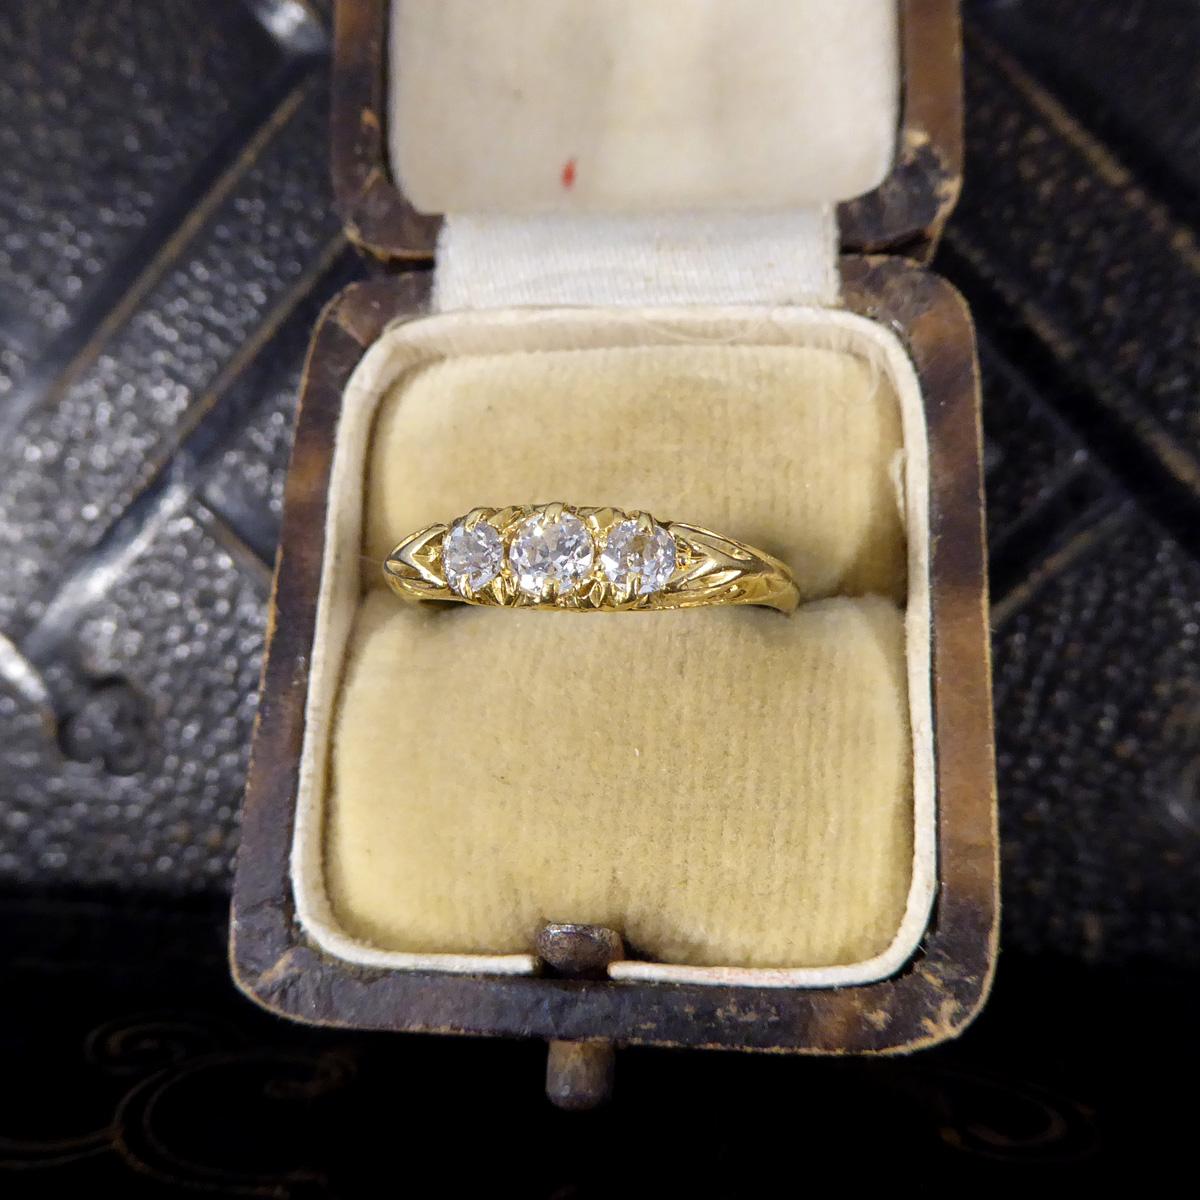 Edwardian Three Stone Diamond Ring with Swirl Gallery in 18 Carat Yellow Gold 4